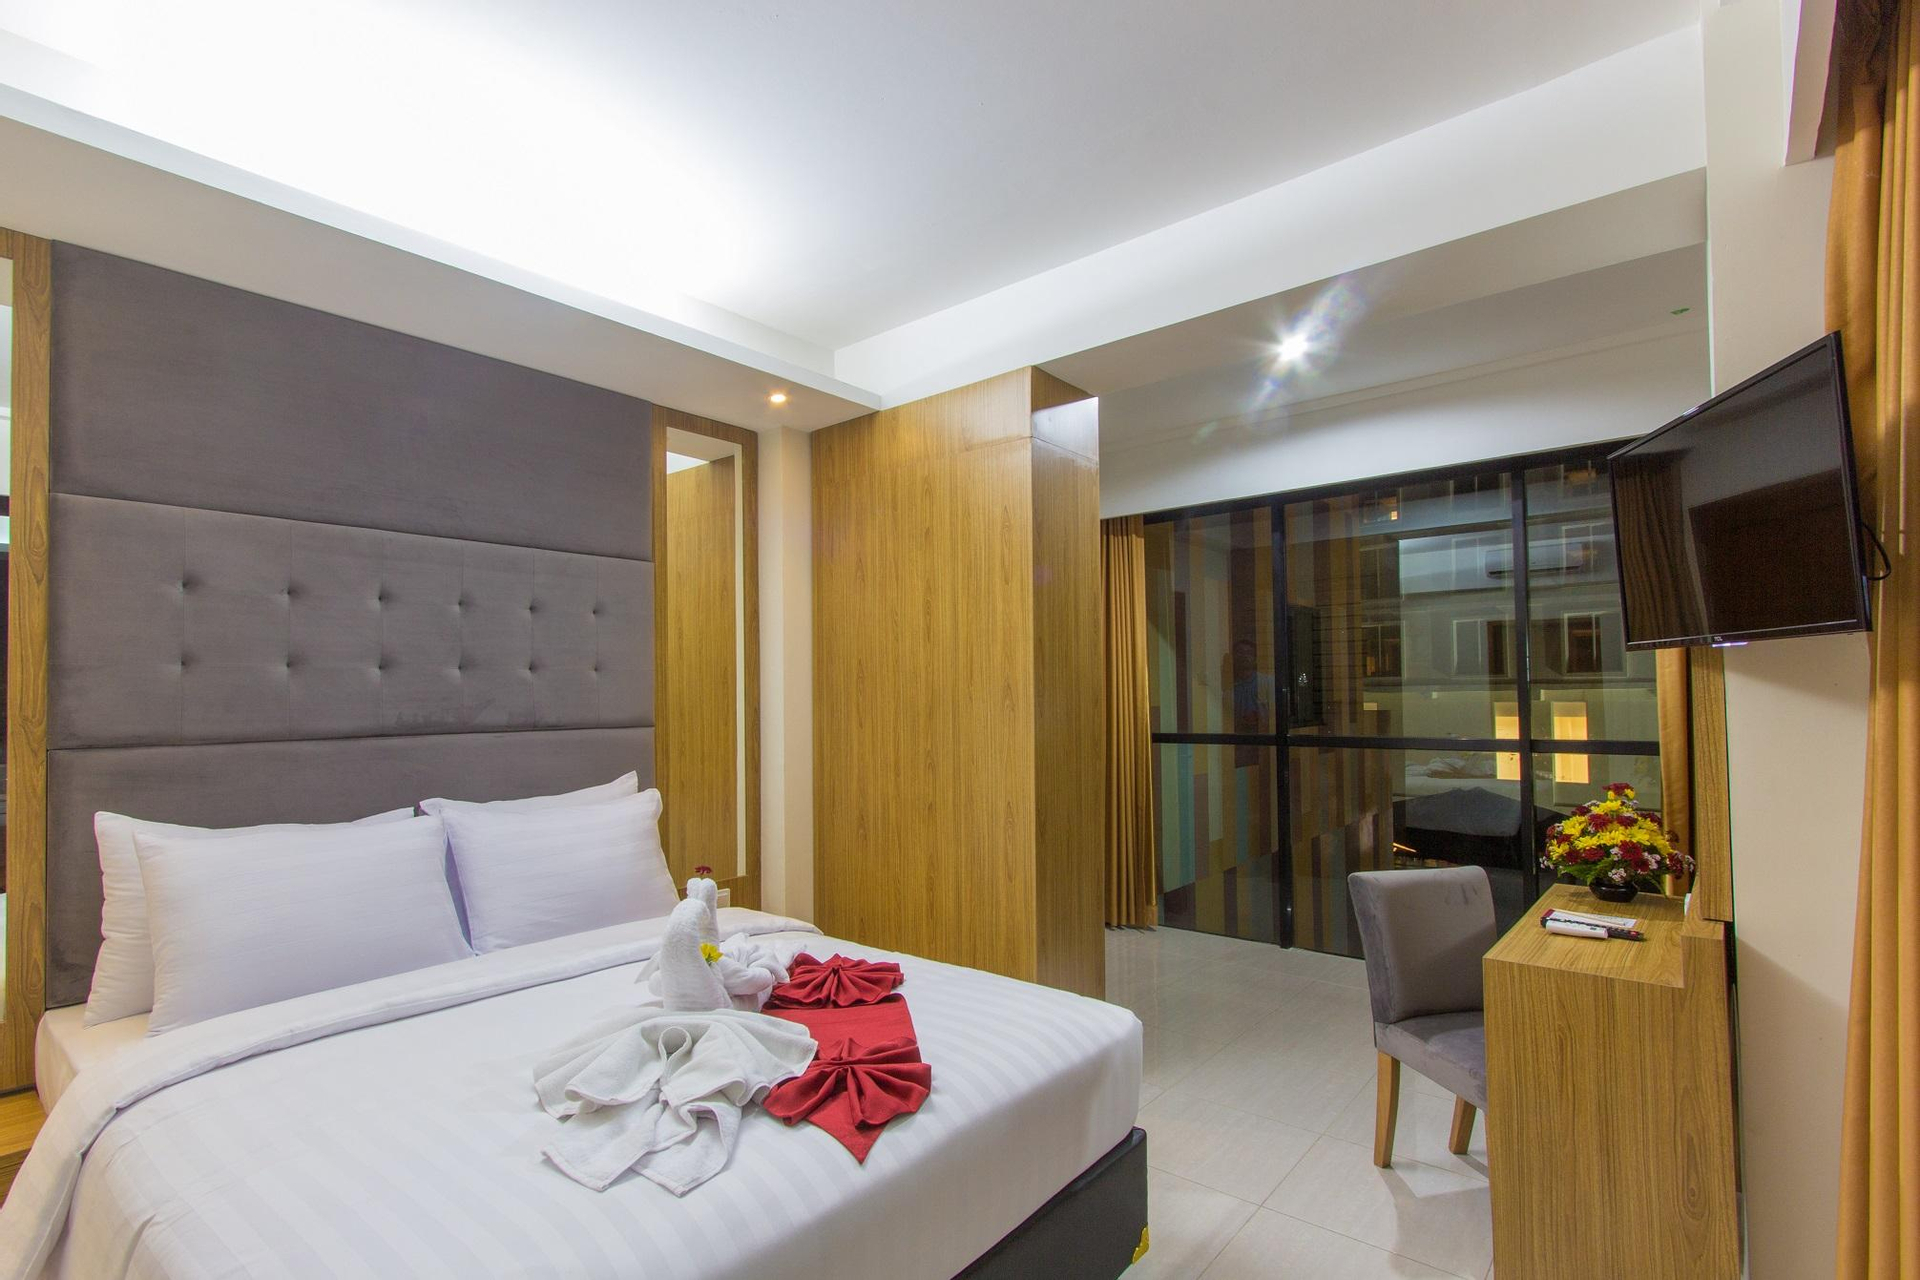 Bedroom 2, Grand Sarila Hotel Yogyakarta, Yogyakarta